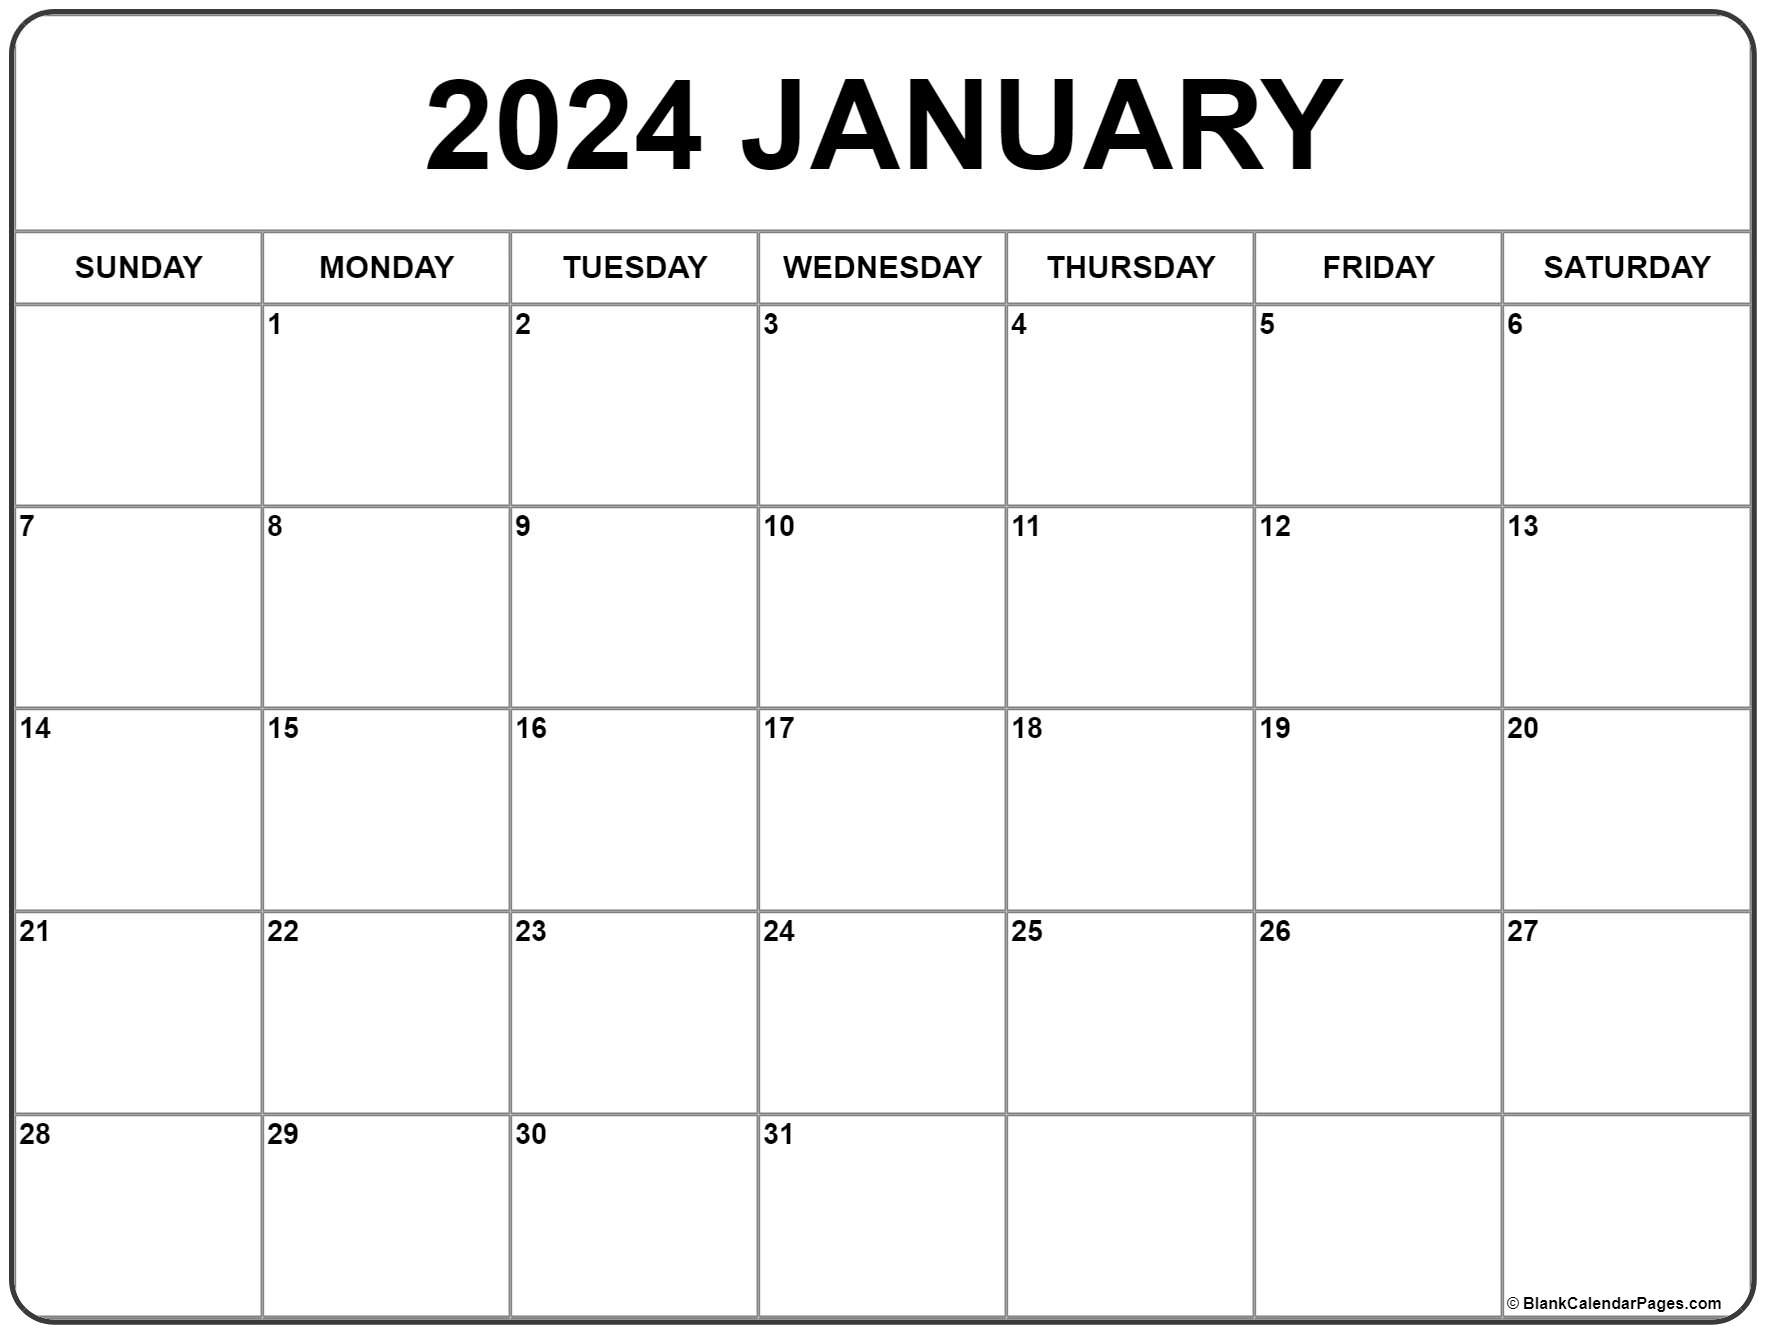 January 2024 Calendar | Free Printable Calendar for Printable January 2024 Calendar Free